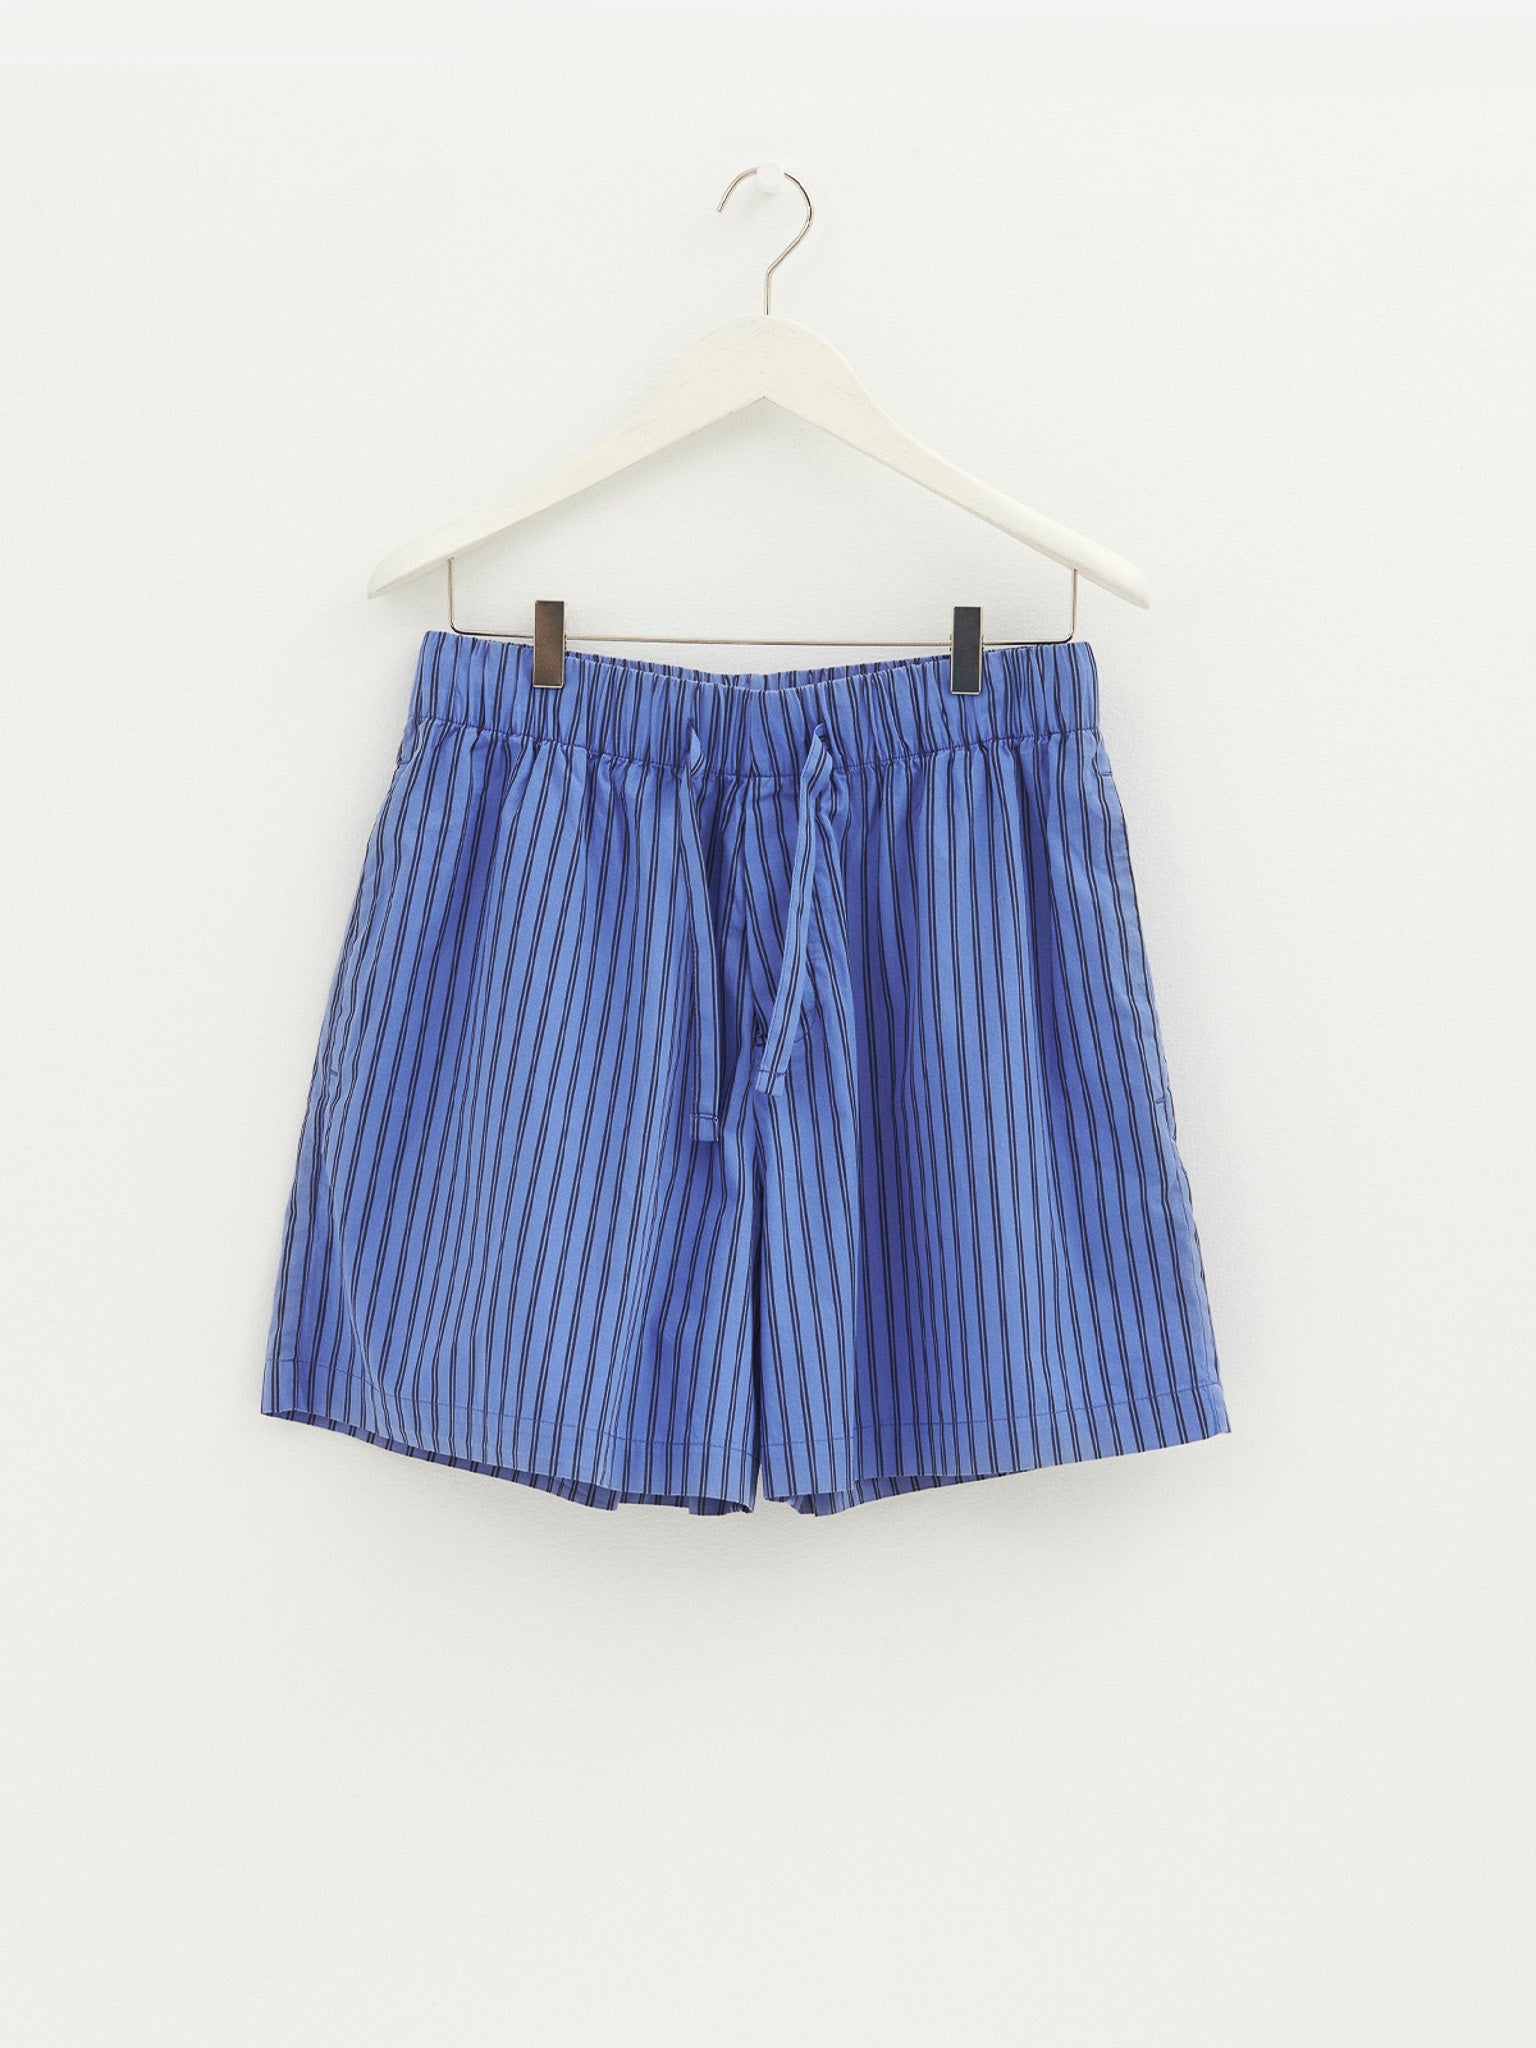 Tekla - Cotton Poplin Pyjamas Shorts in Boro Stripes